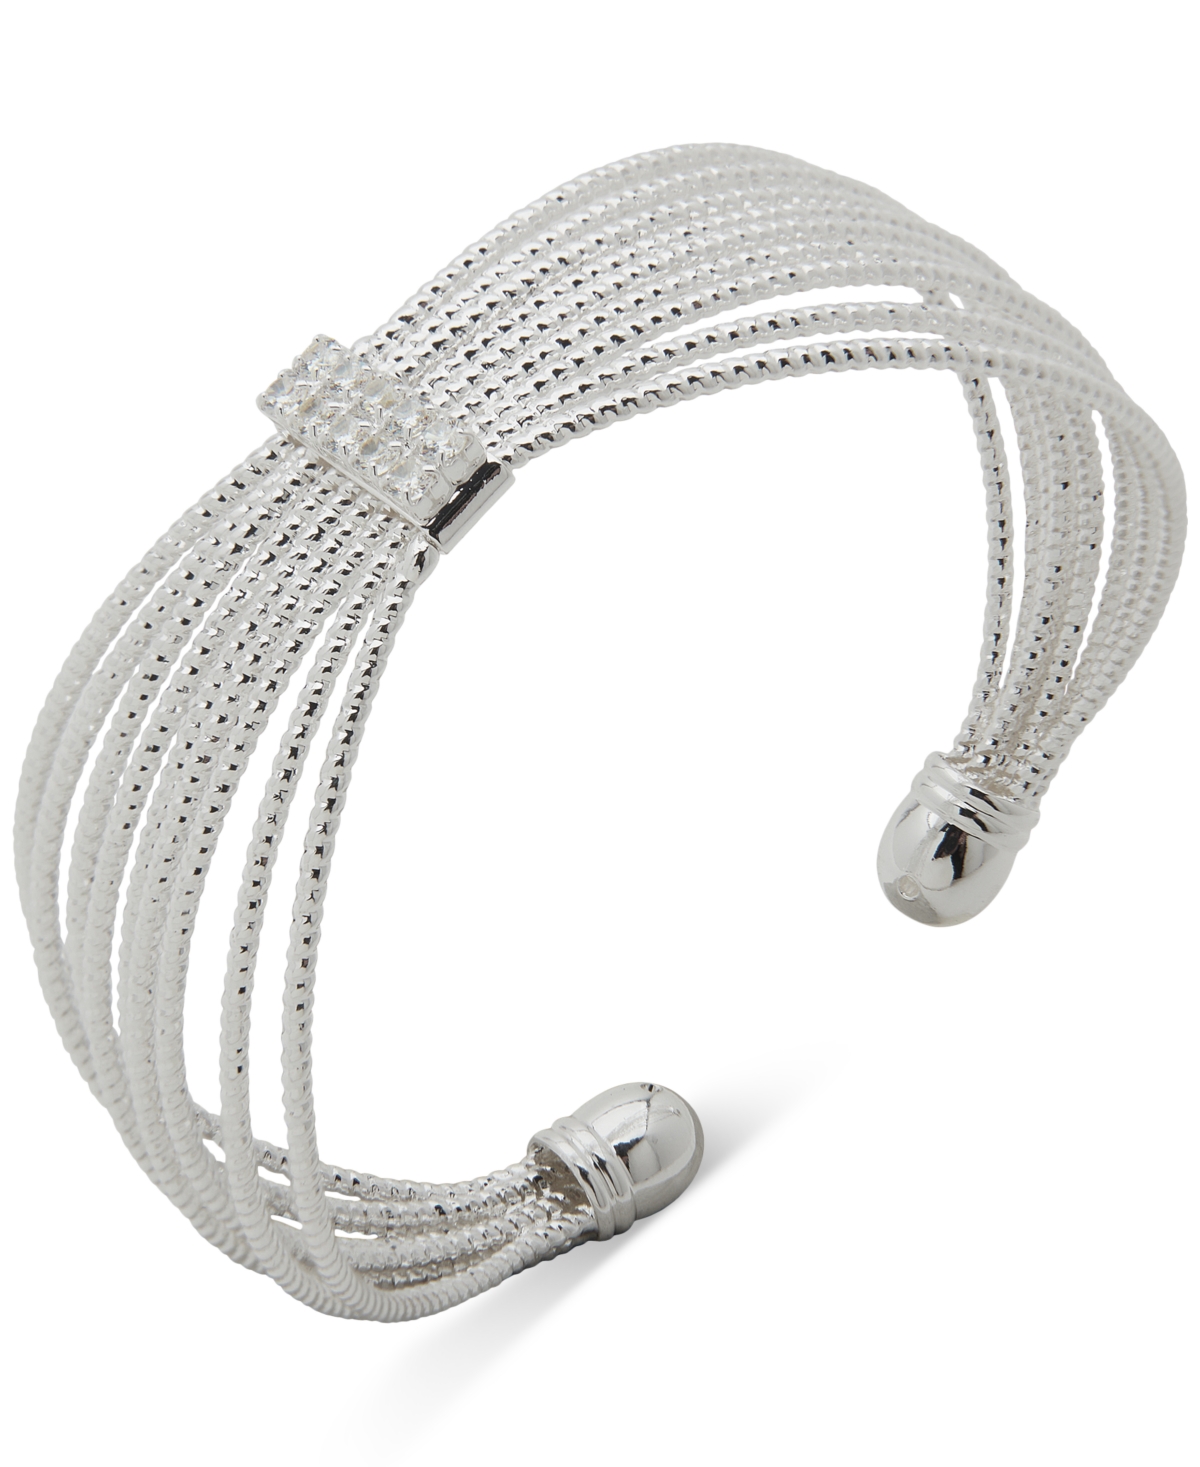 Silver-Tone Cubic Zirconia Multi-Row Cuff Bracelet - Crystal Wh